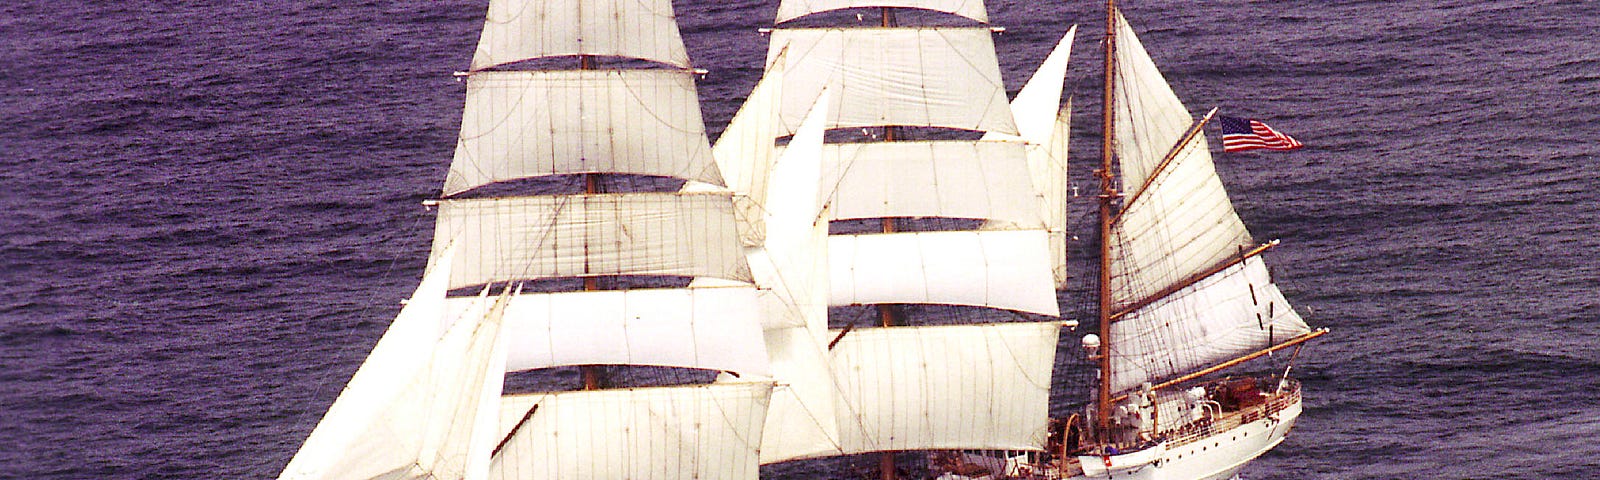 A large three-masted U.S. Coast Guard sailing ship is under full sail on the high seas.